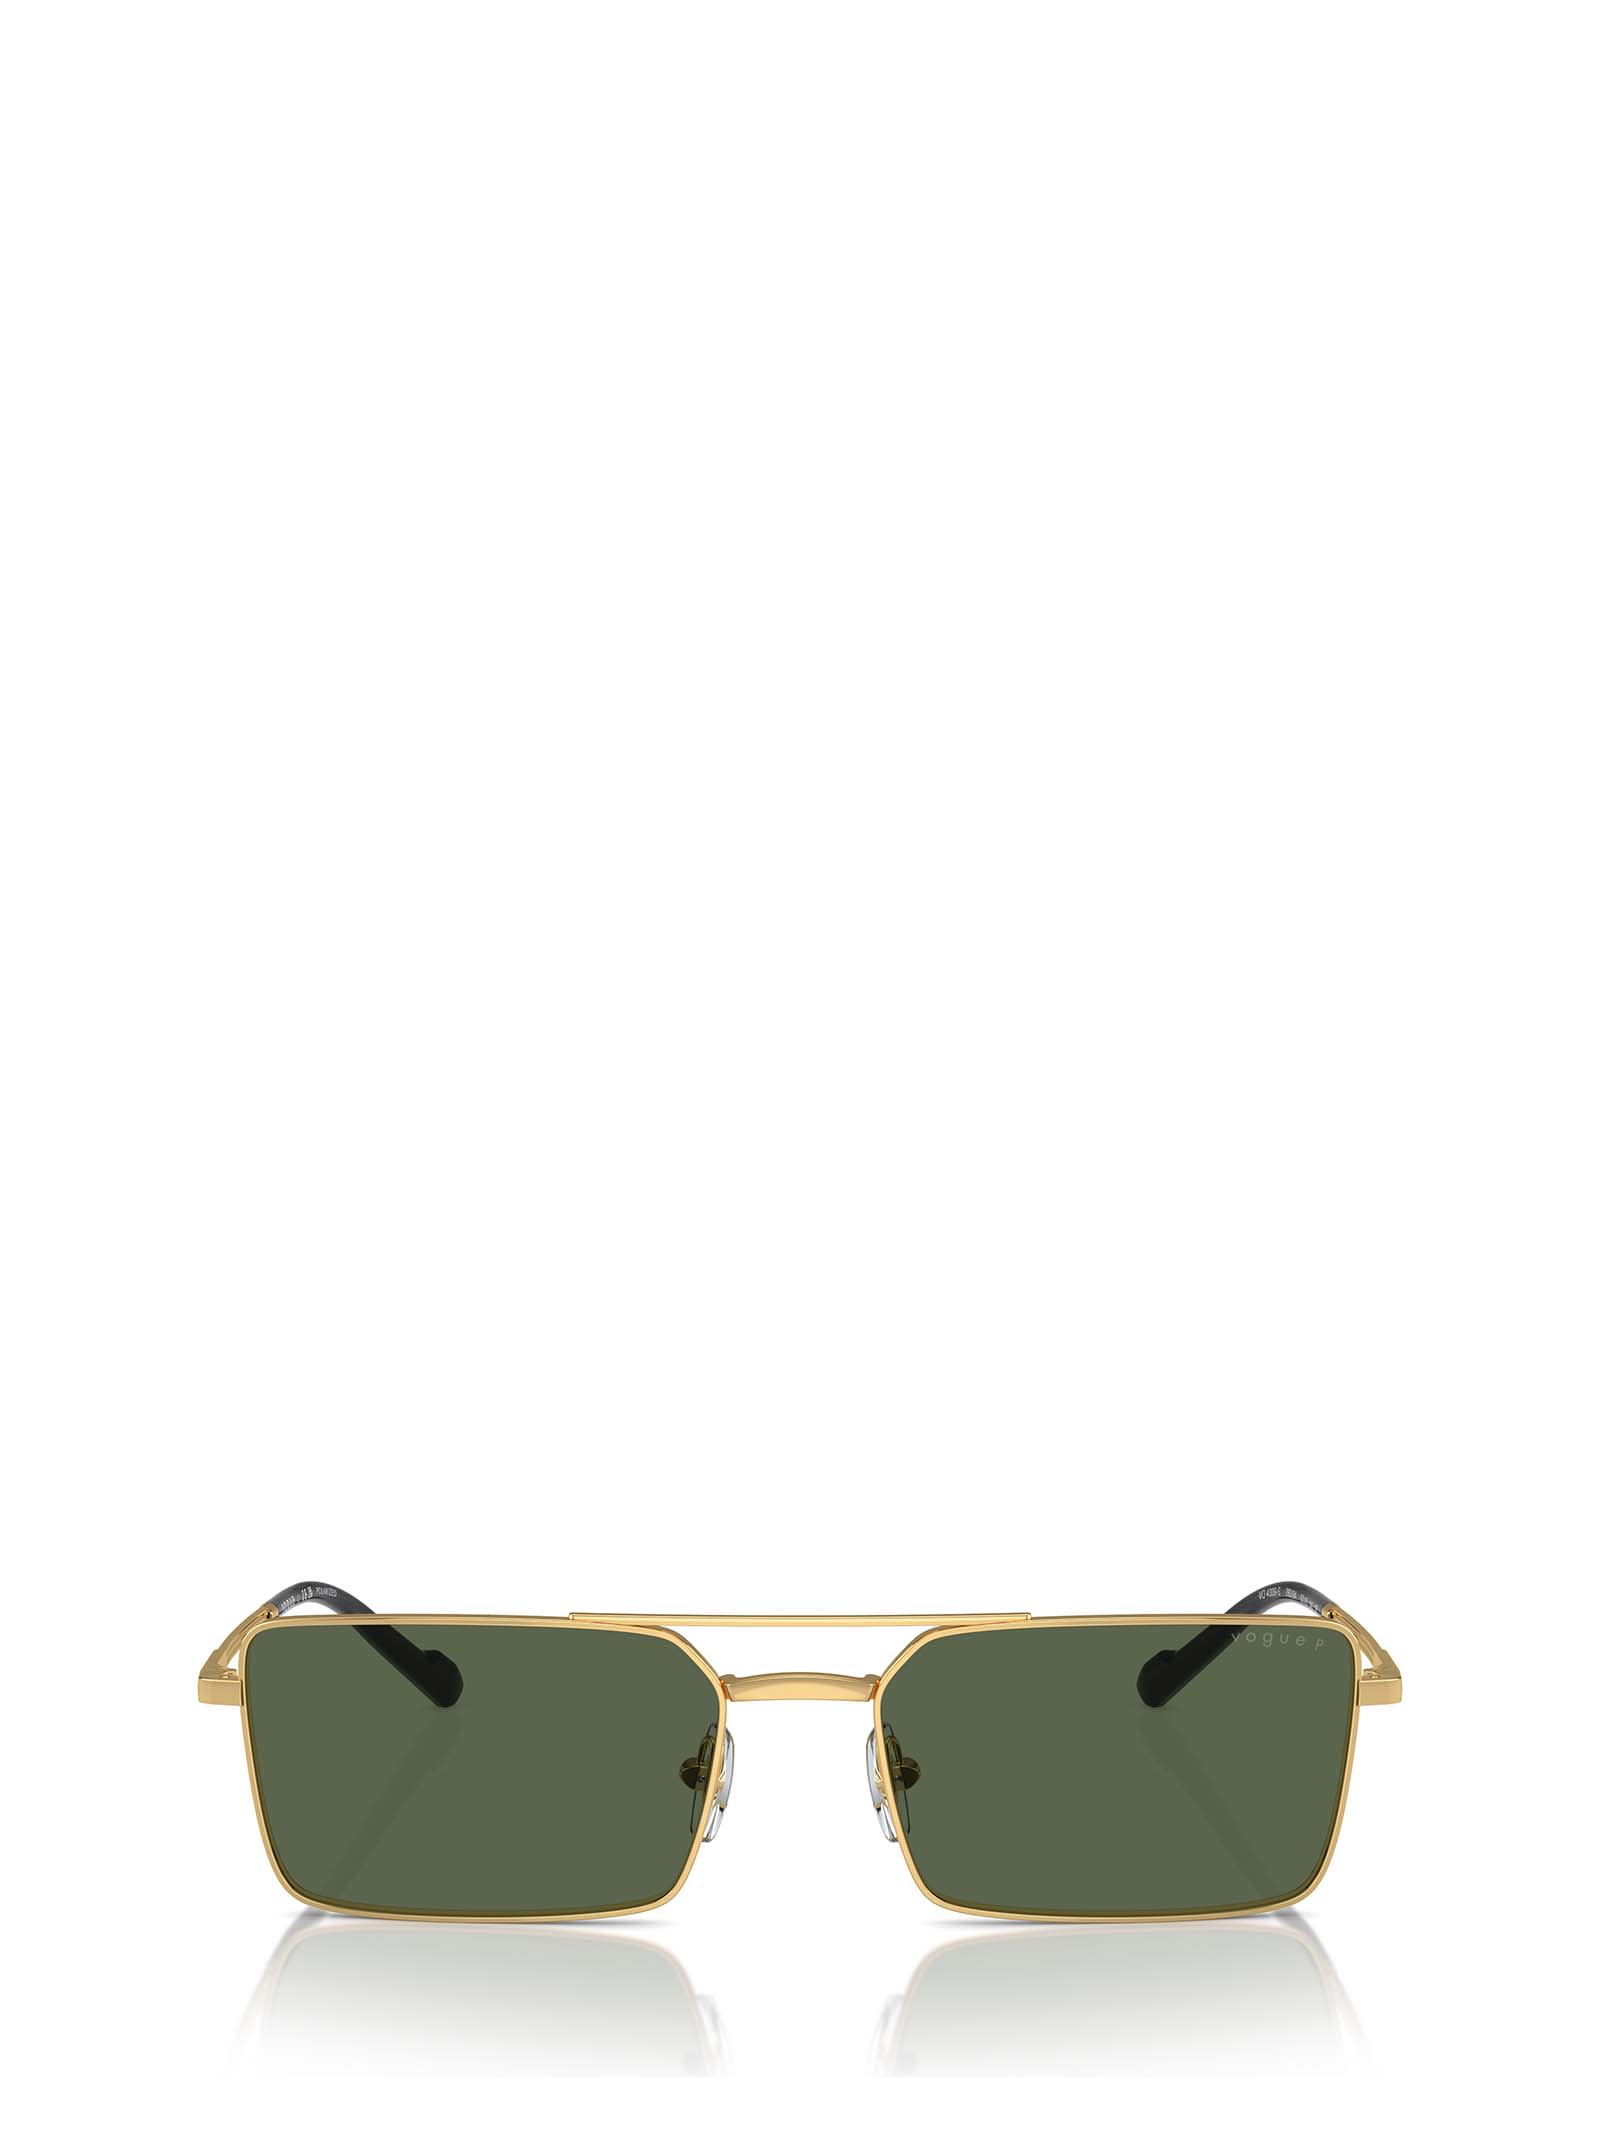 Vogue Eyewear Vo4309s Gold Sunglasses